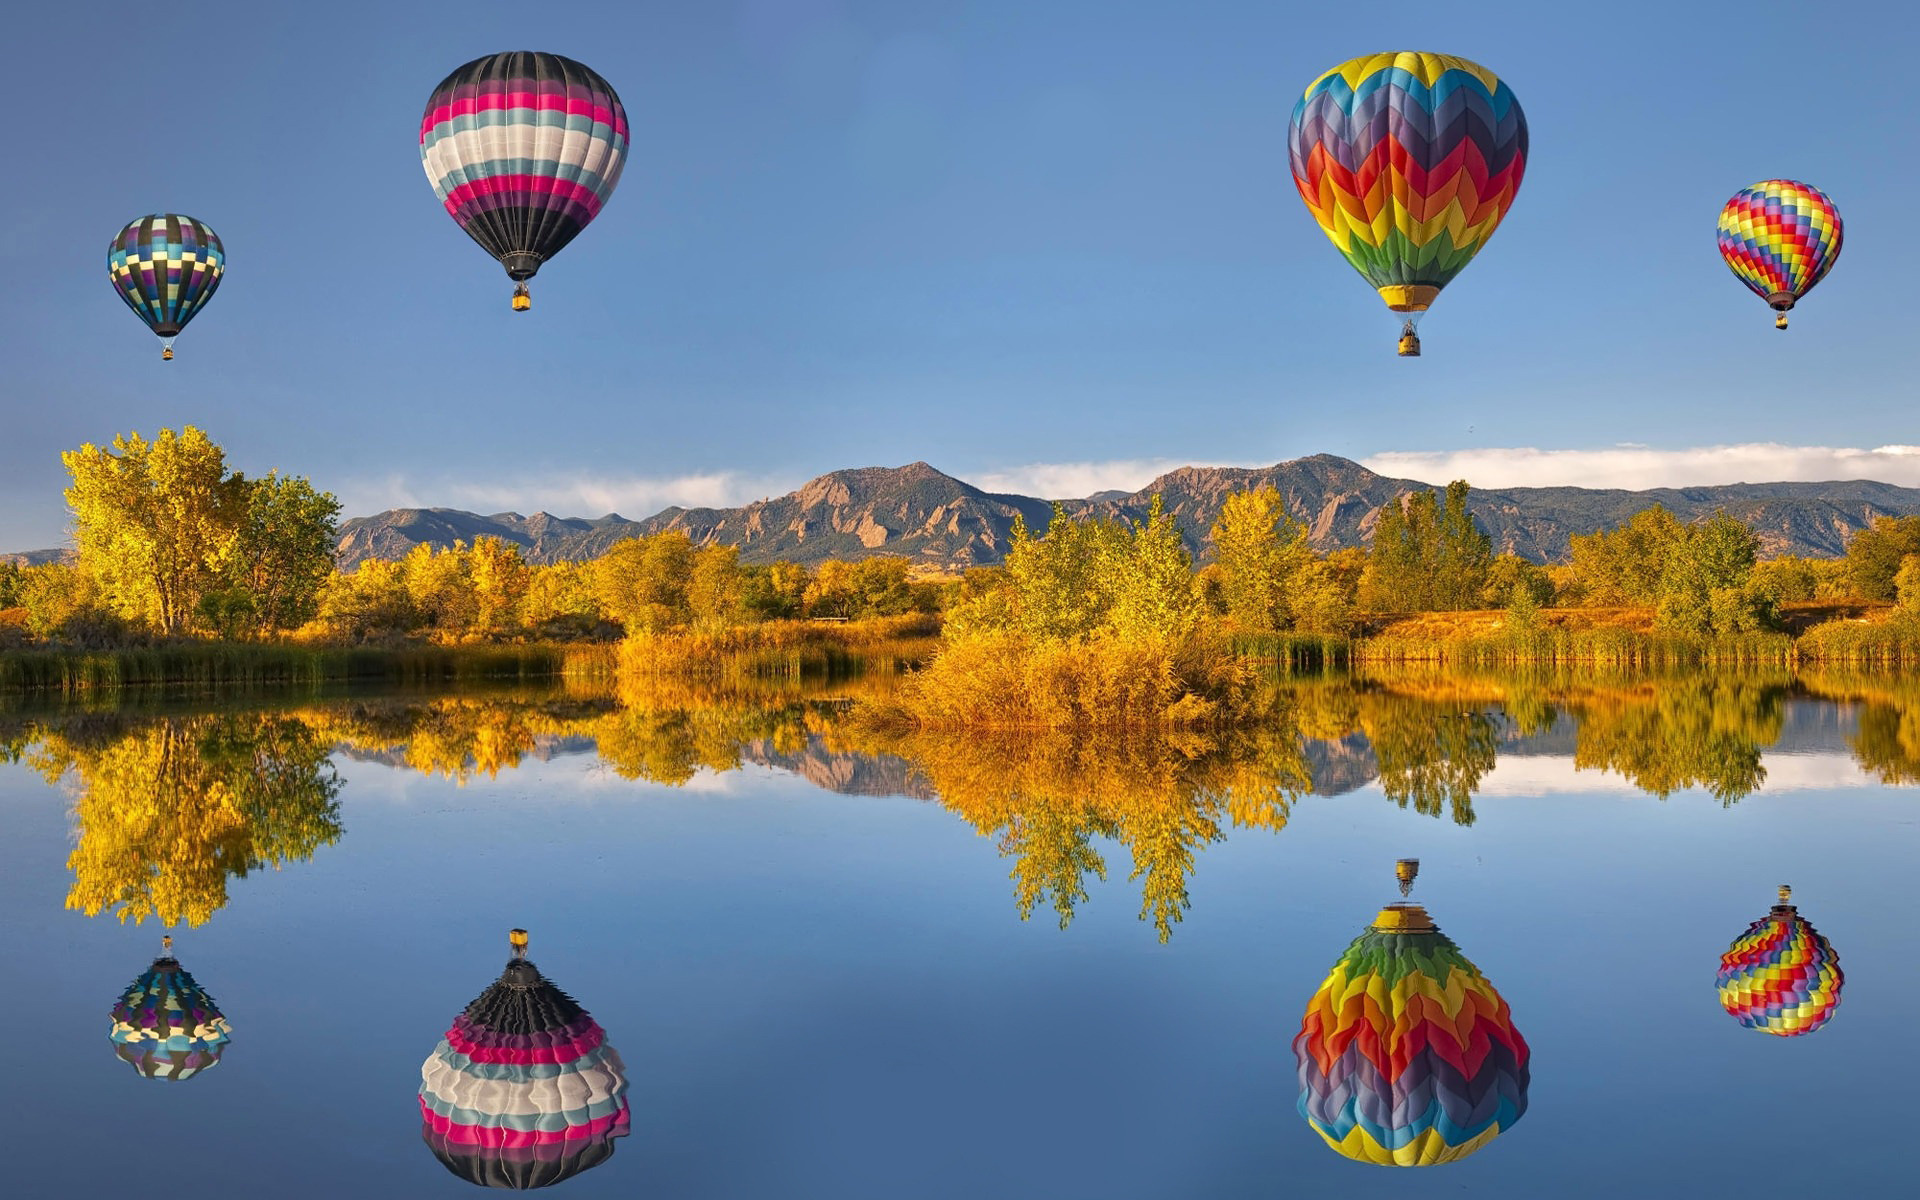 Wallpaper Hot Air Balloon Reflection Lake Mountains Autumn Desktop